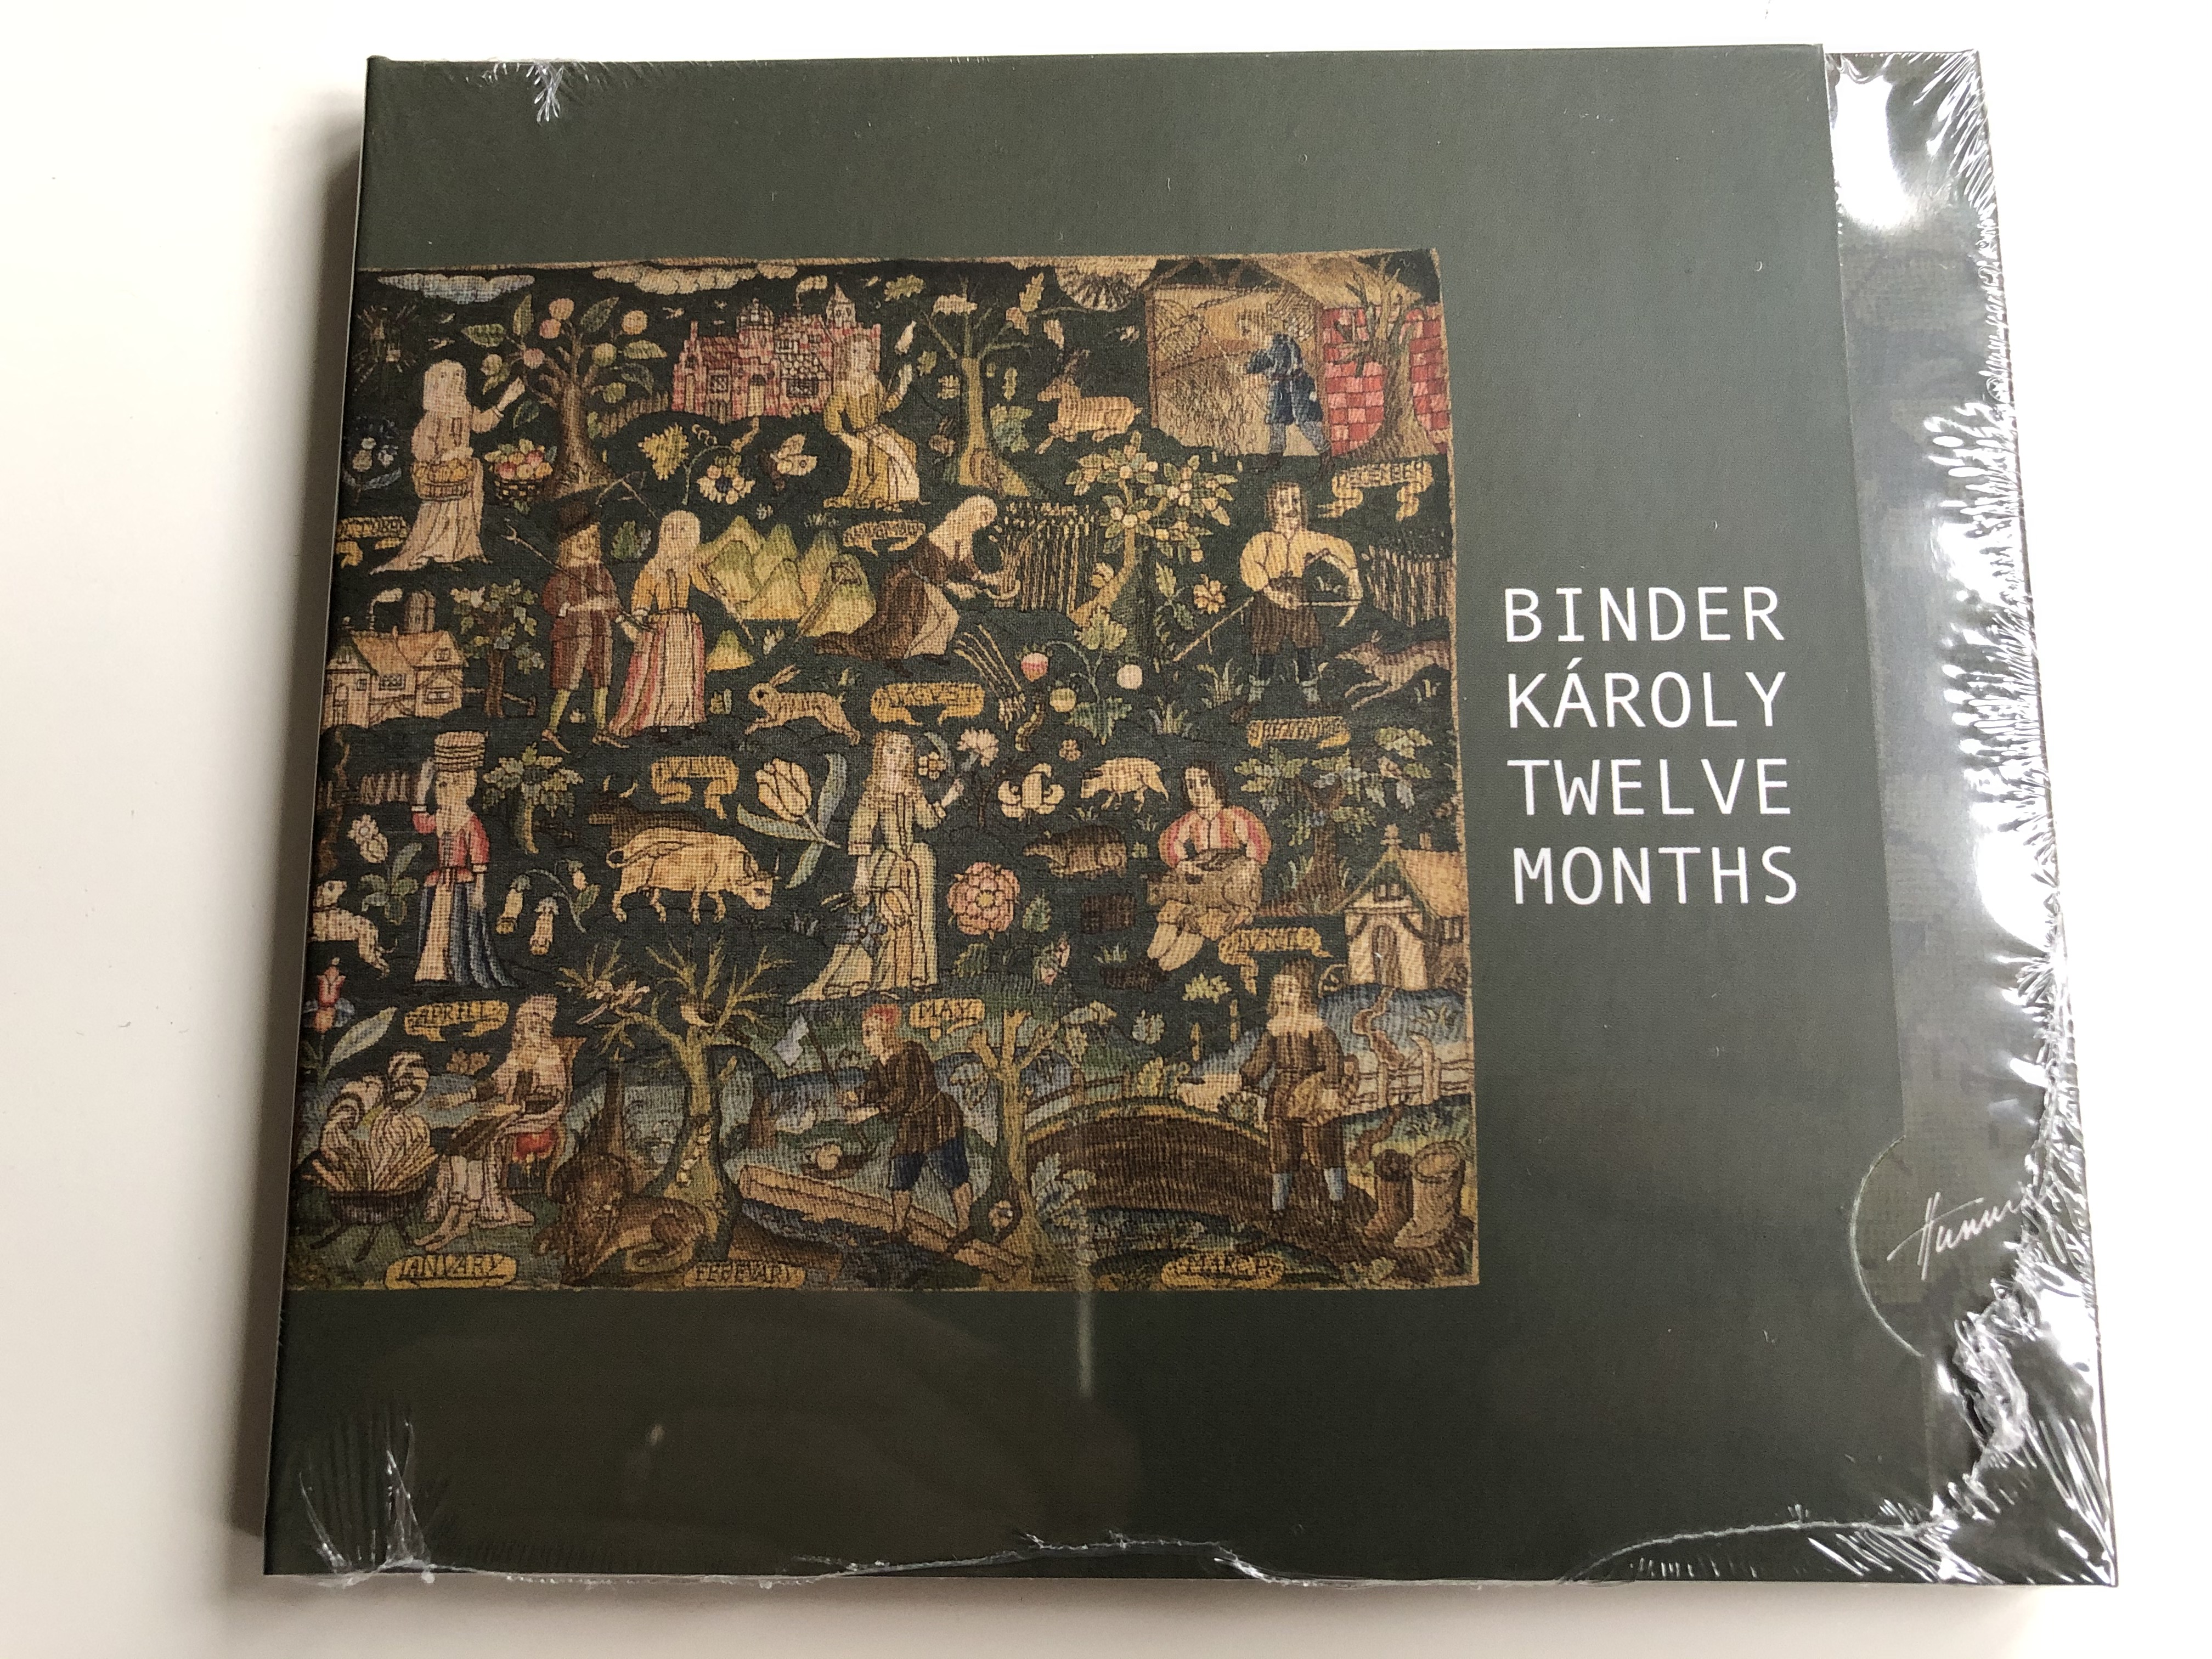 binder-karoly-twelve-months-hunnia-records-film-production-audio-cd-2017-hrcd1703-1-.jpg